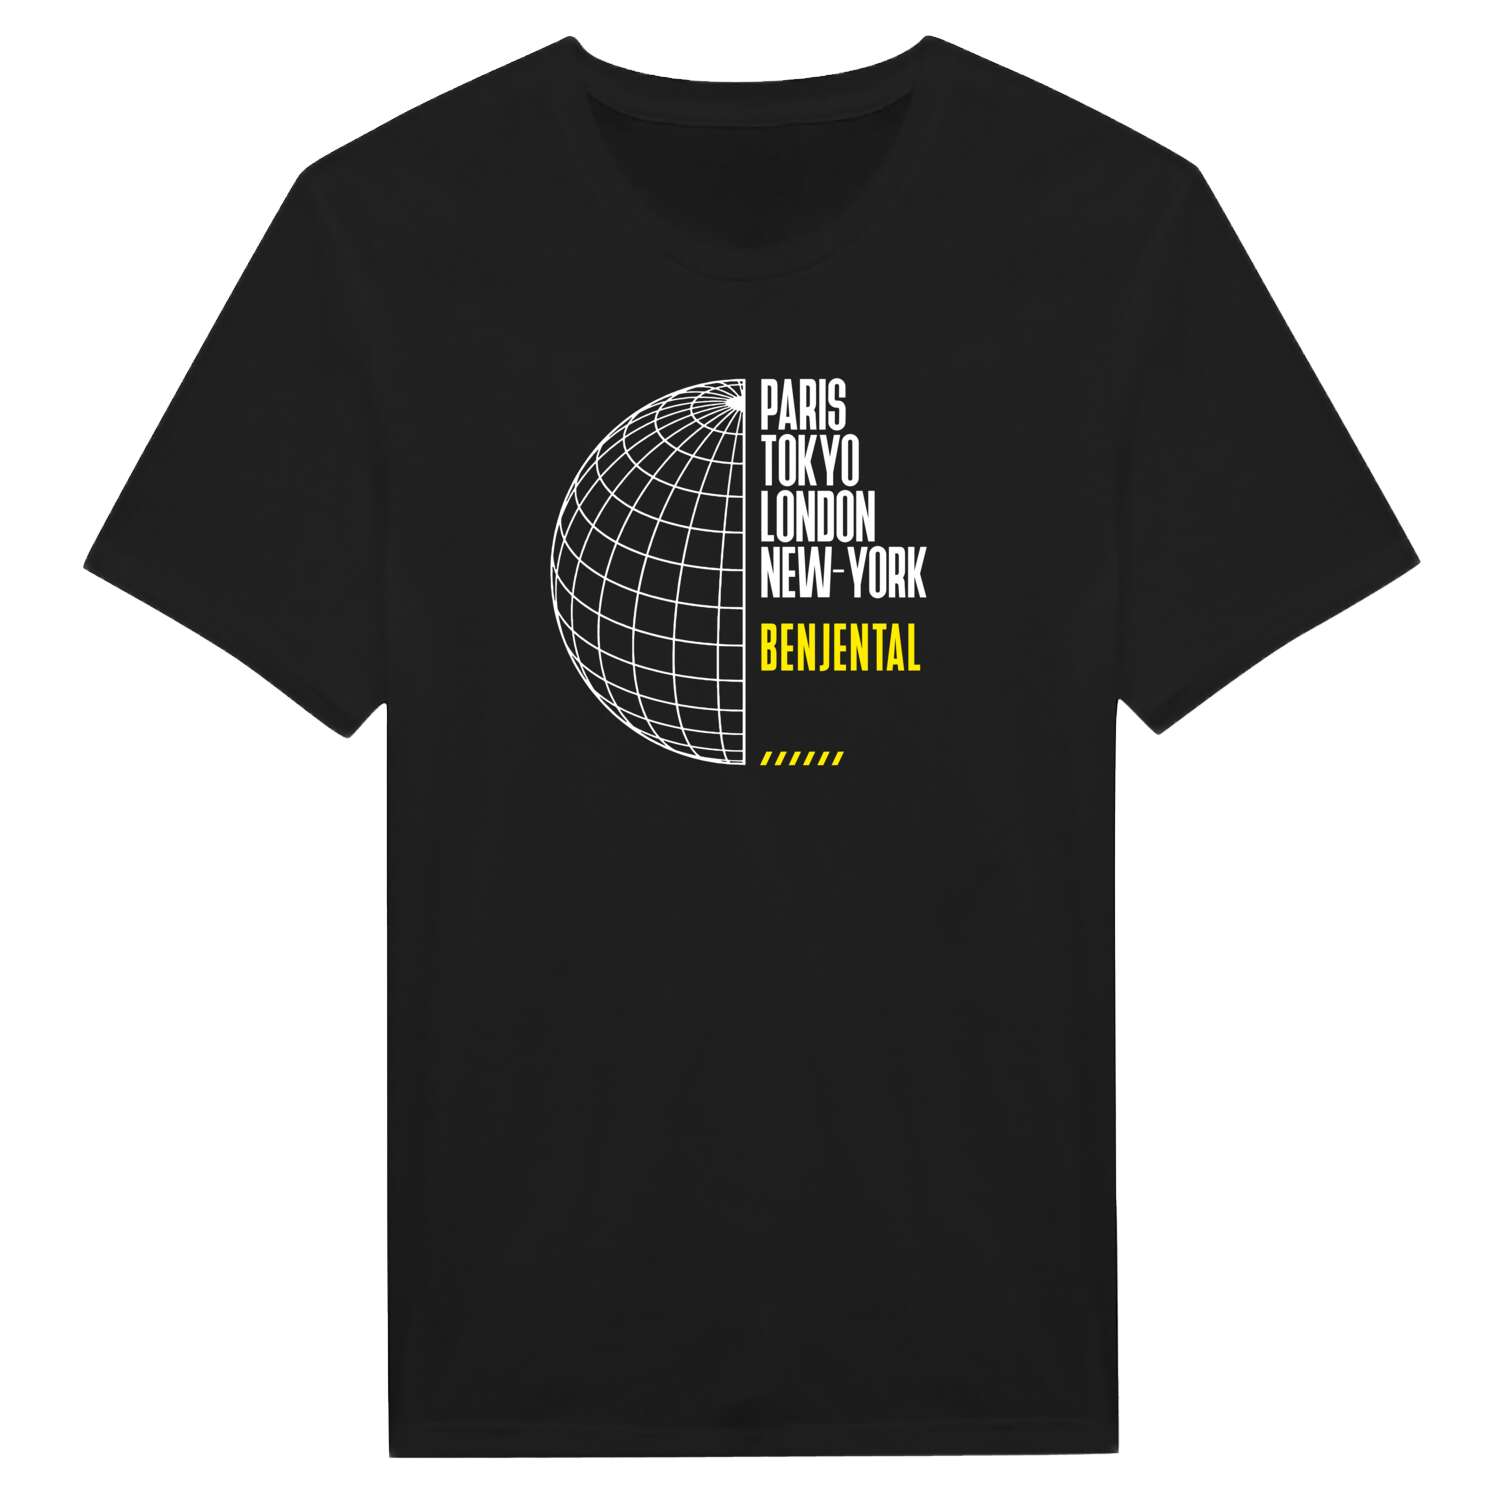 Benjental T-Shirt »Paris Tokyo London«